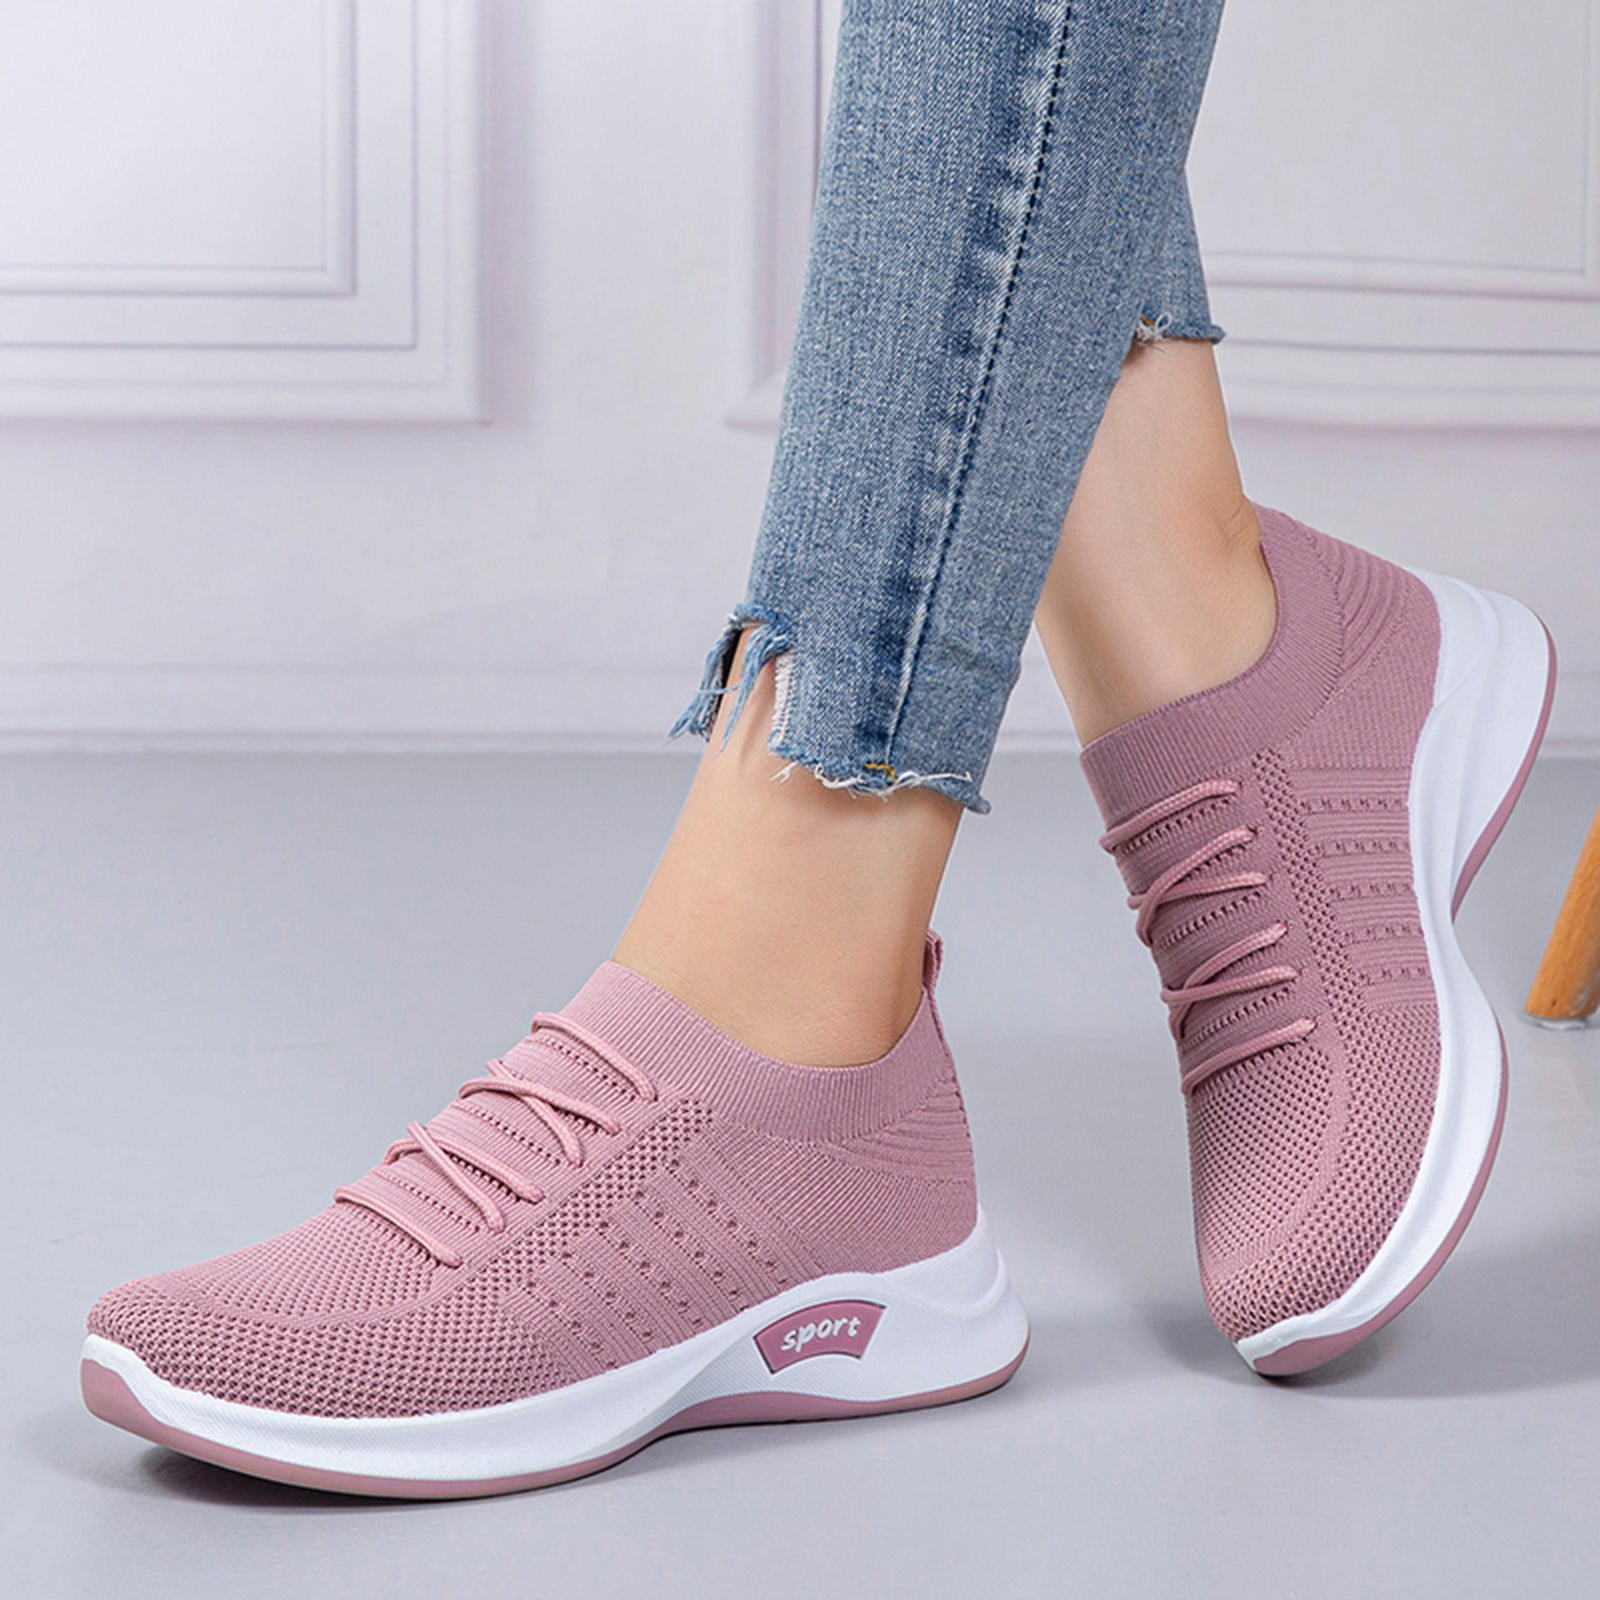 Sparx Women Casual Shoes, Pink White, SL-188 (S 8) – Hayumsidaba